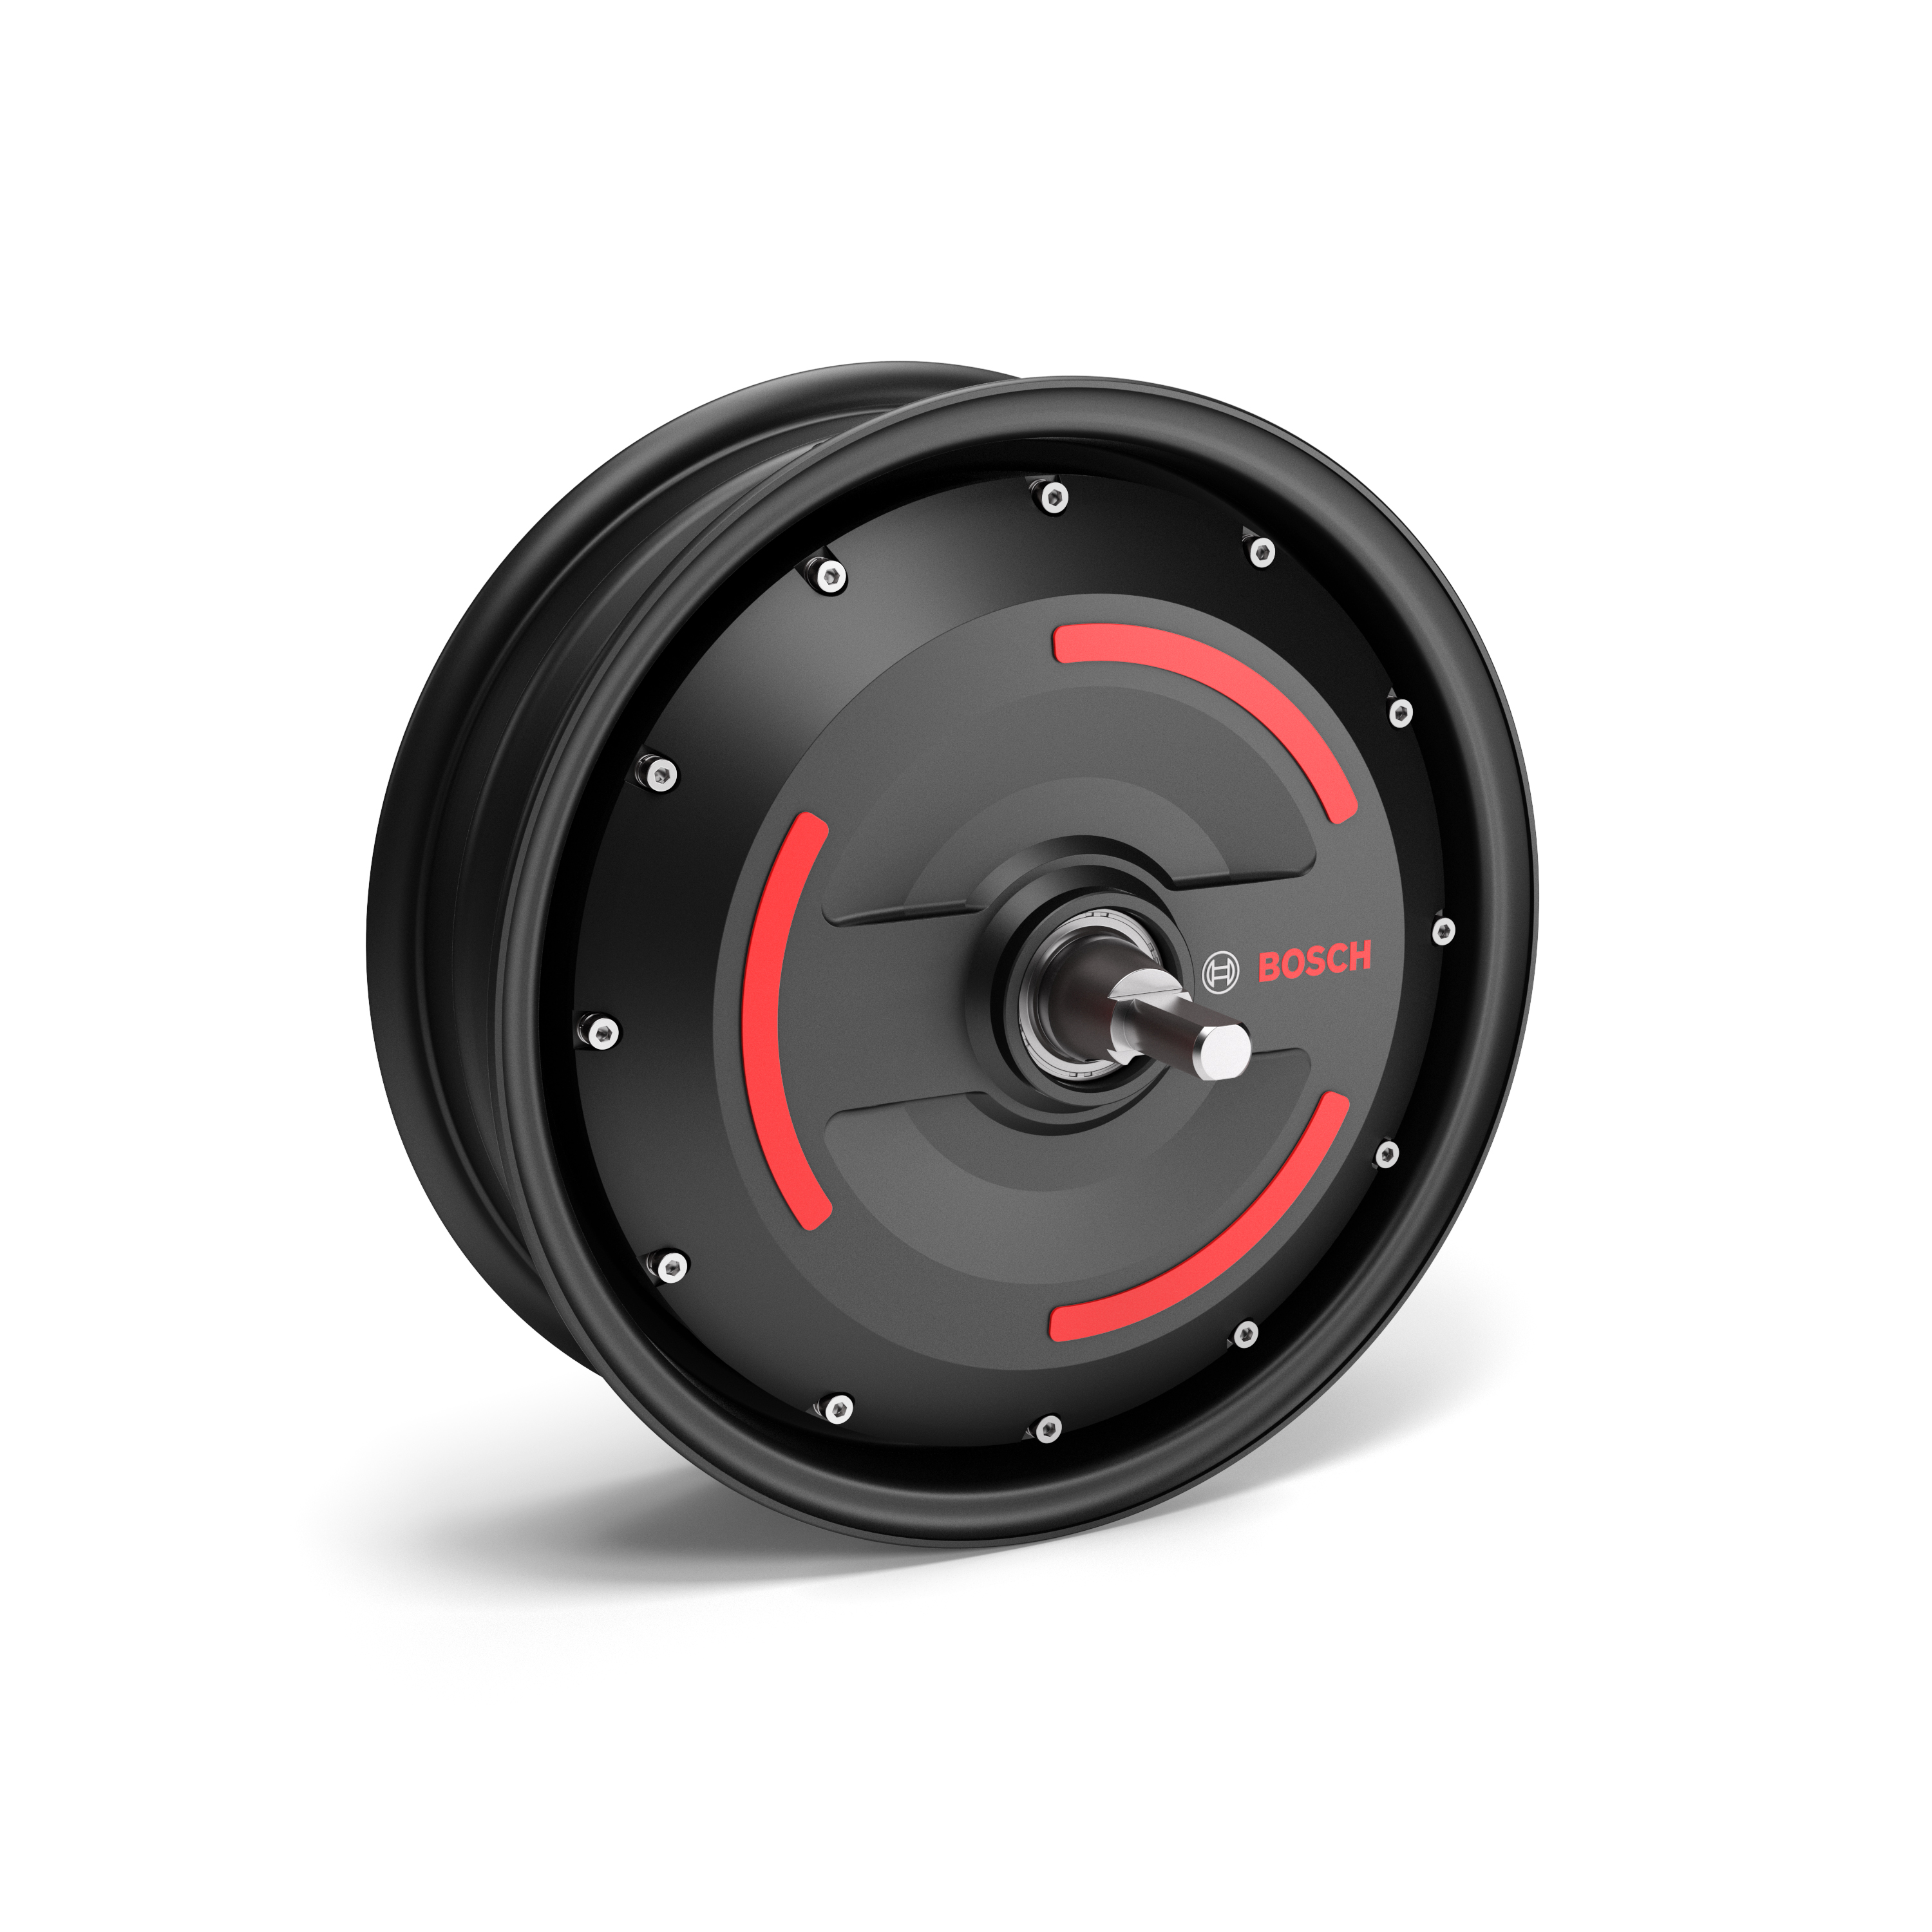 Bosch electric wheel hub motor